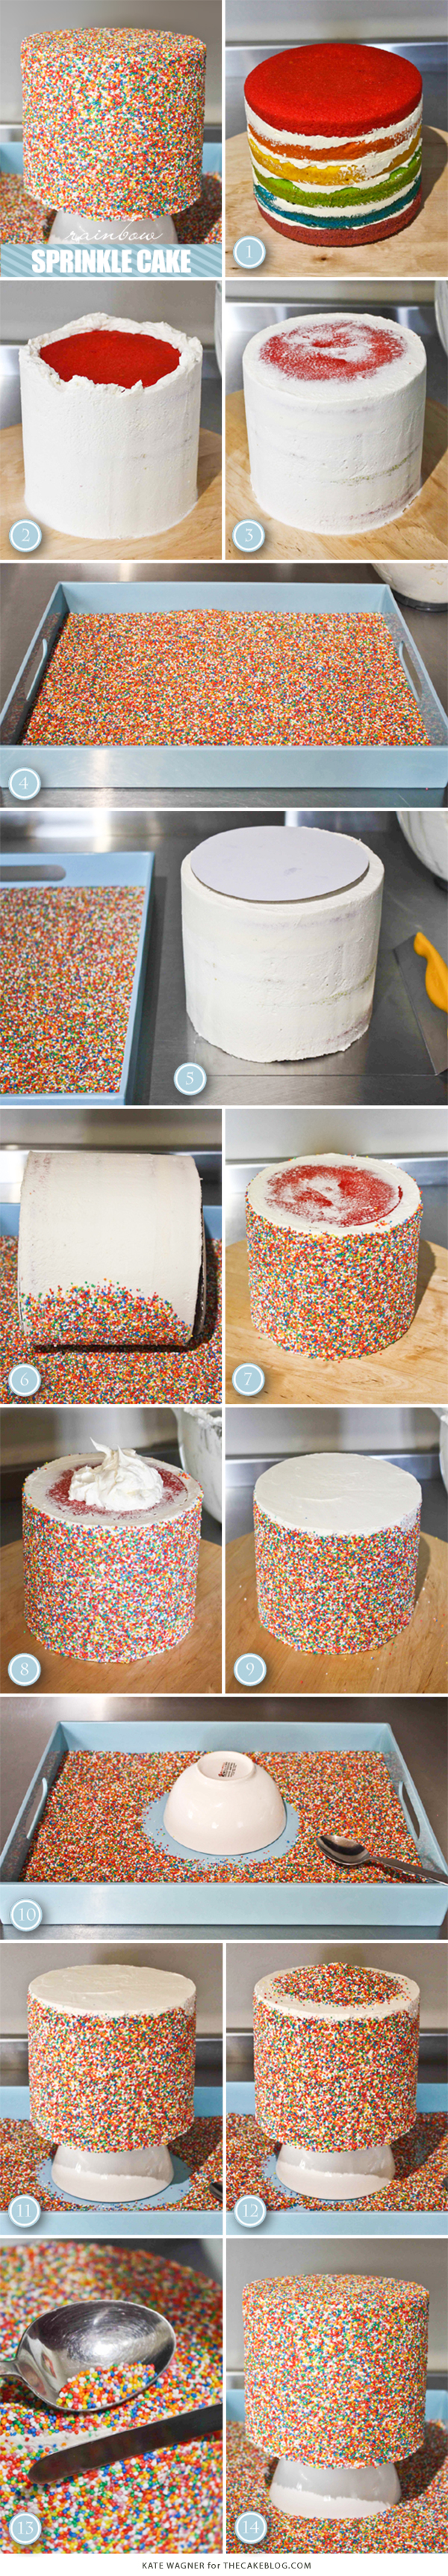 DIY Sprinkle Cake Tutorial | Kate Wagner for TheCakeBlog.com